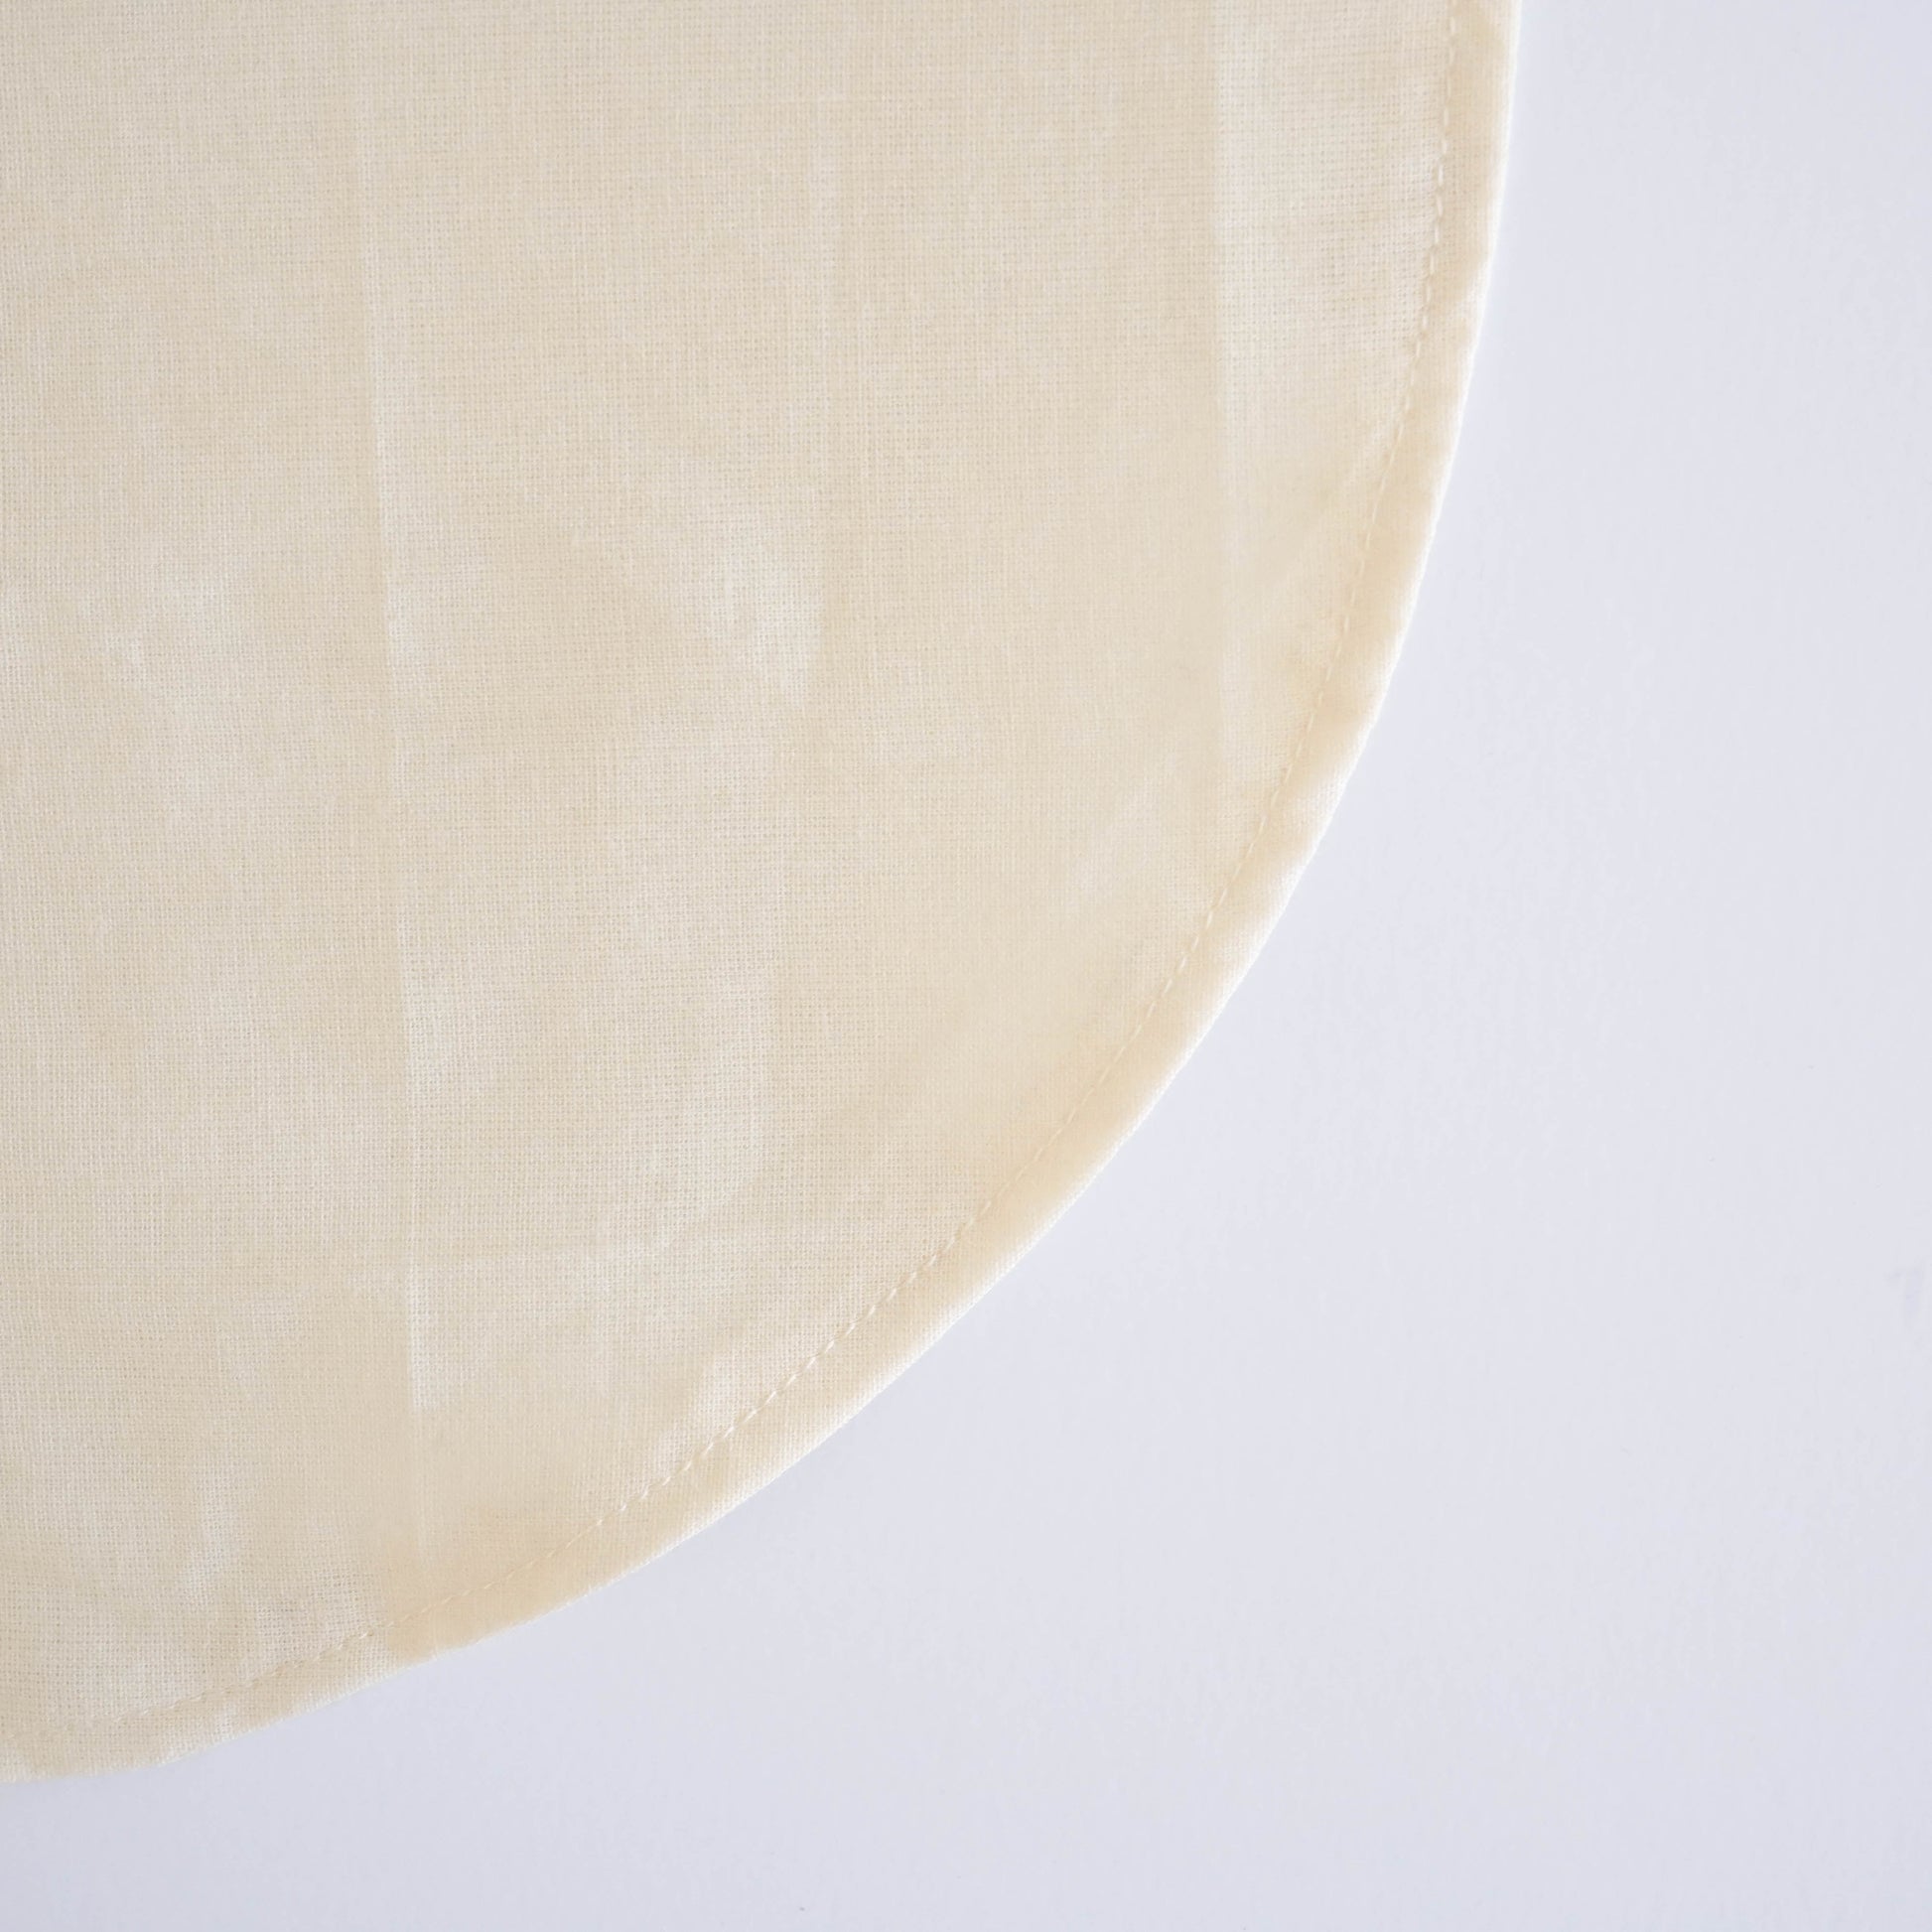 Aji Circle Filter - Flat Bottom Cloth coffee filter - Reusable coffee filter close up stitching design